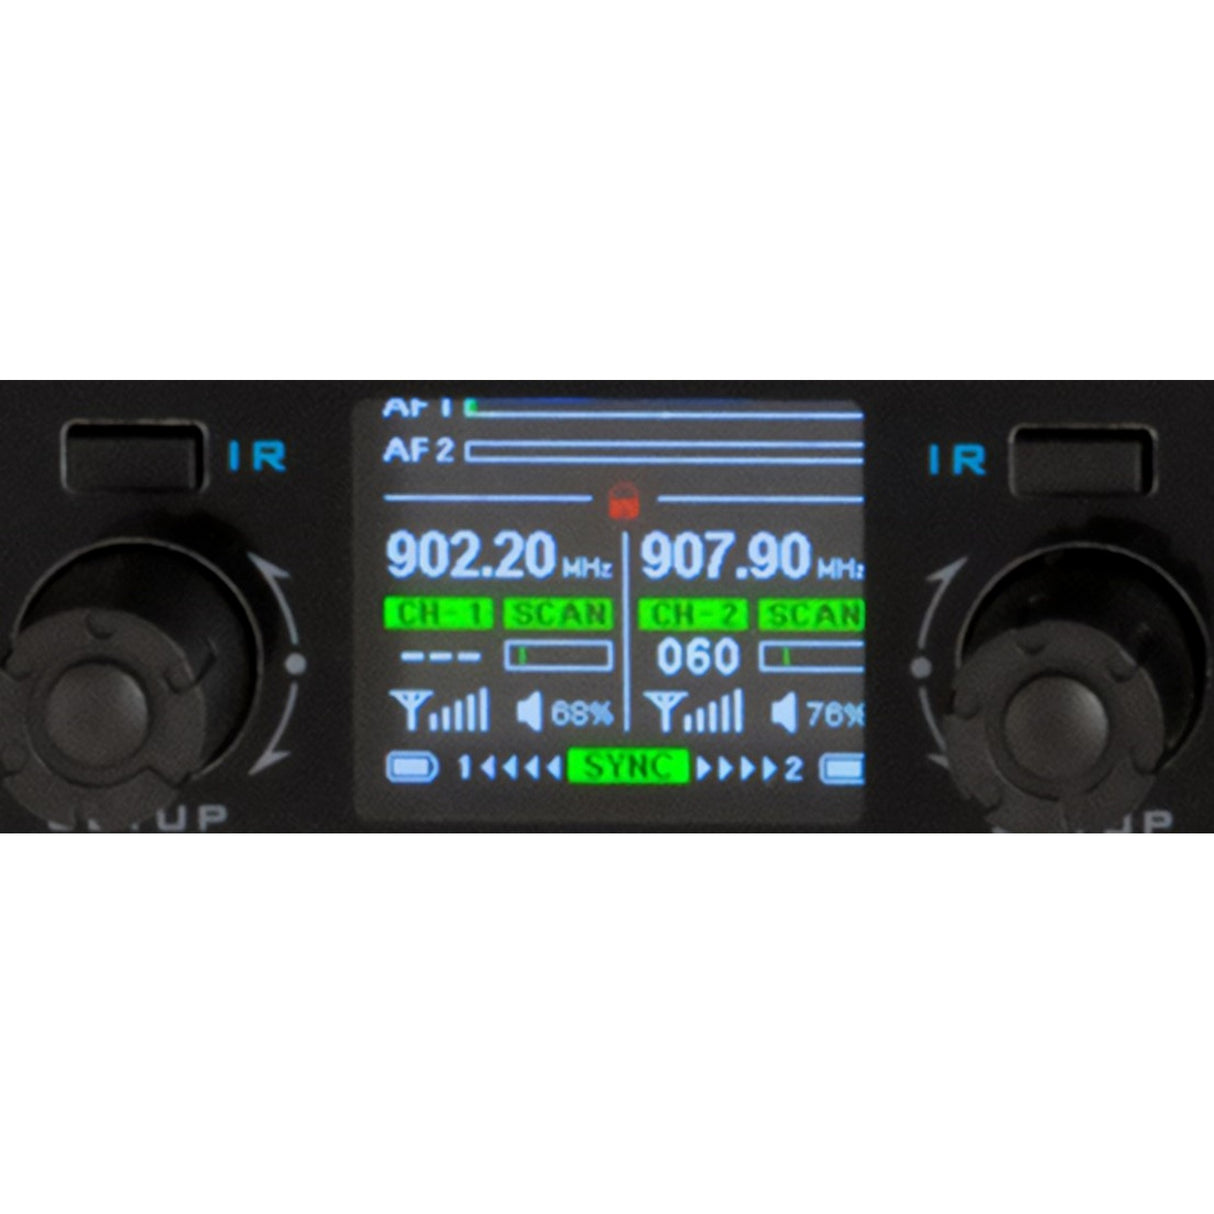 VocoPro UDX-Acapella-24 24-User PLL Professional Digital Wireless Handheld Microphone System